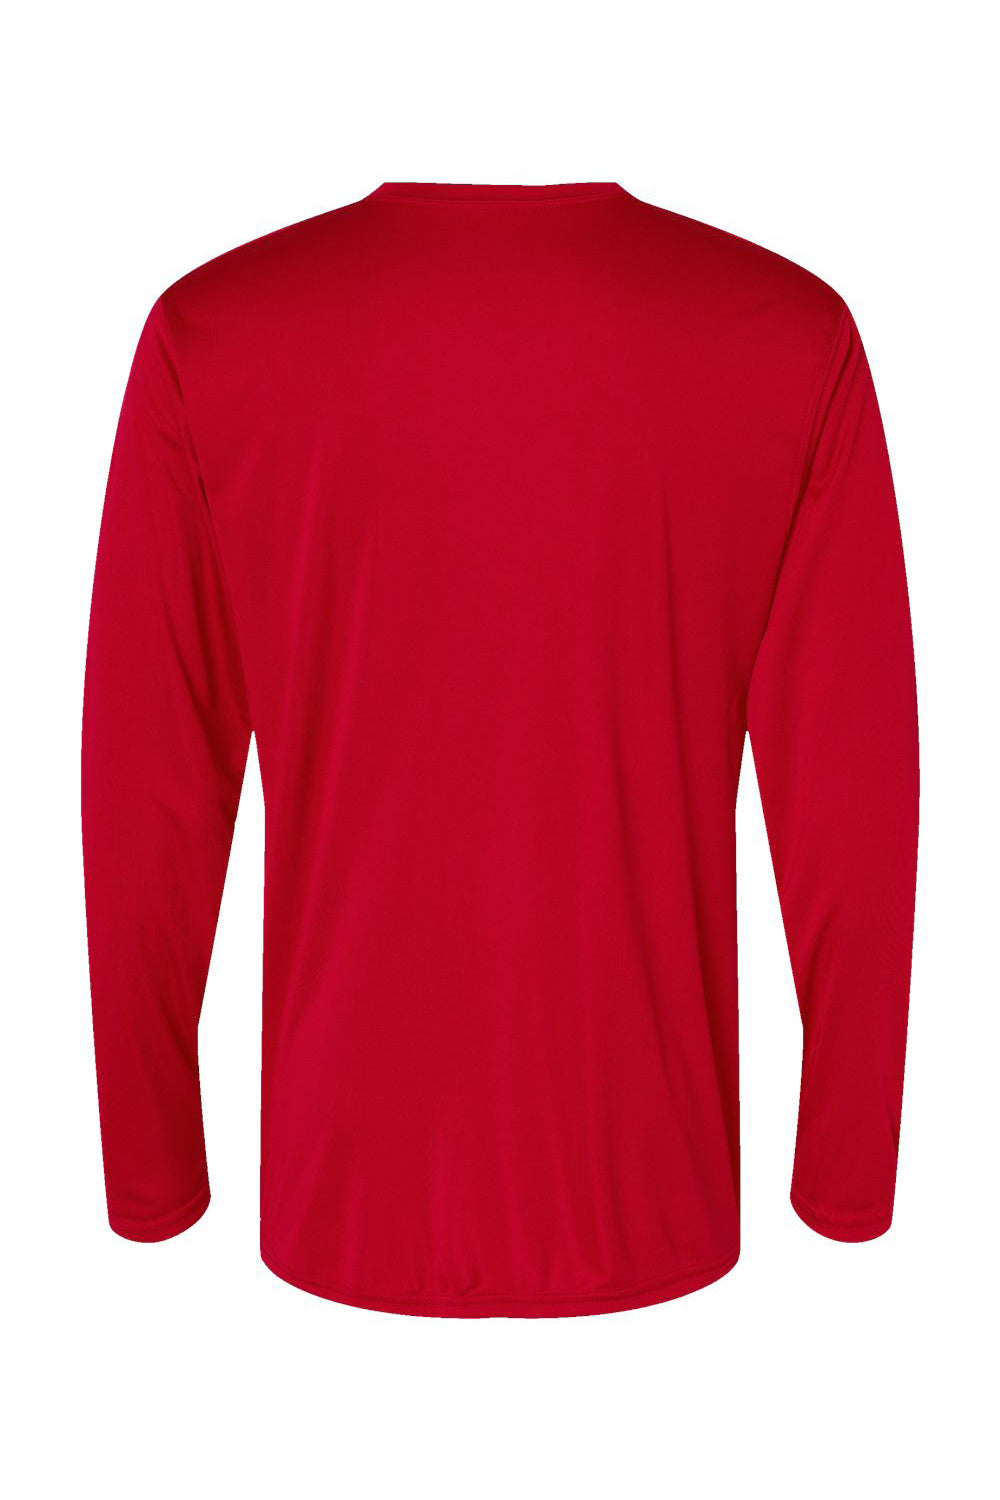 Holloway 222822 Mens Momentum Long Sleeve Crewneck T-Shirt Scarlet Red Flat Back